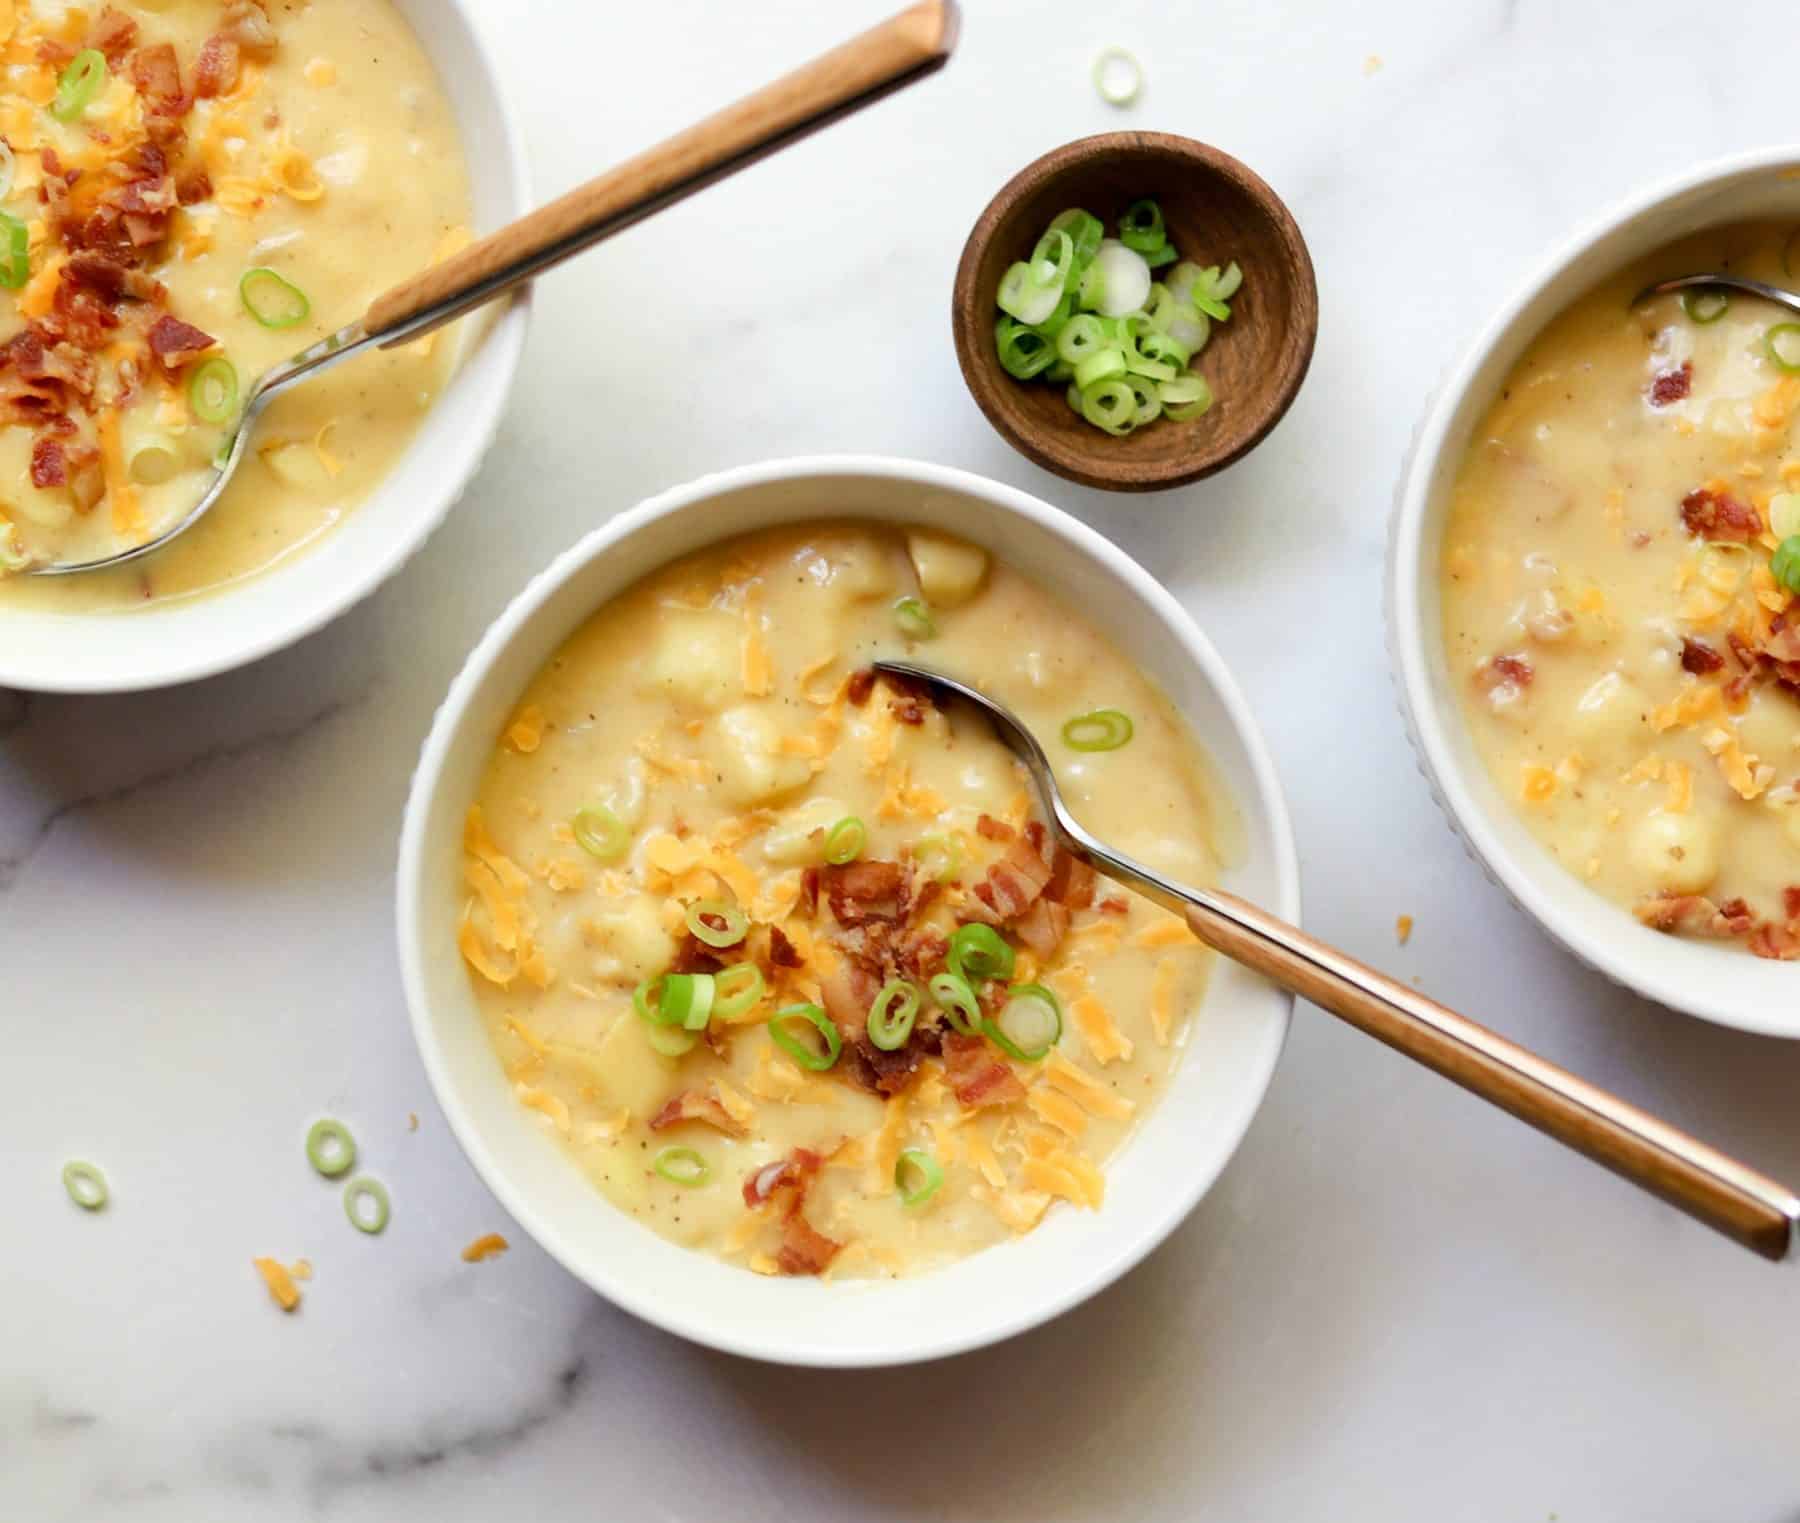 Cheesy potato soup in white bowls